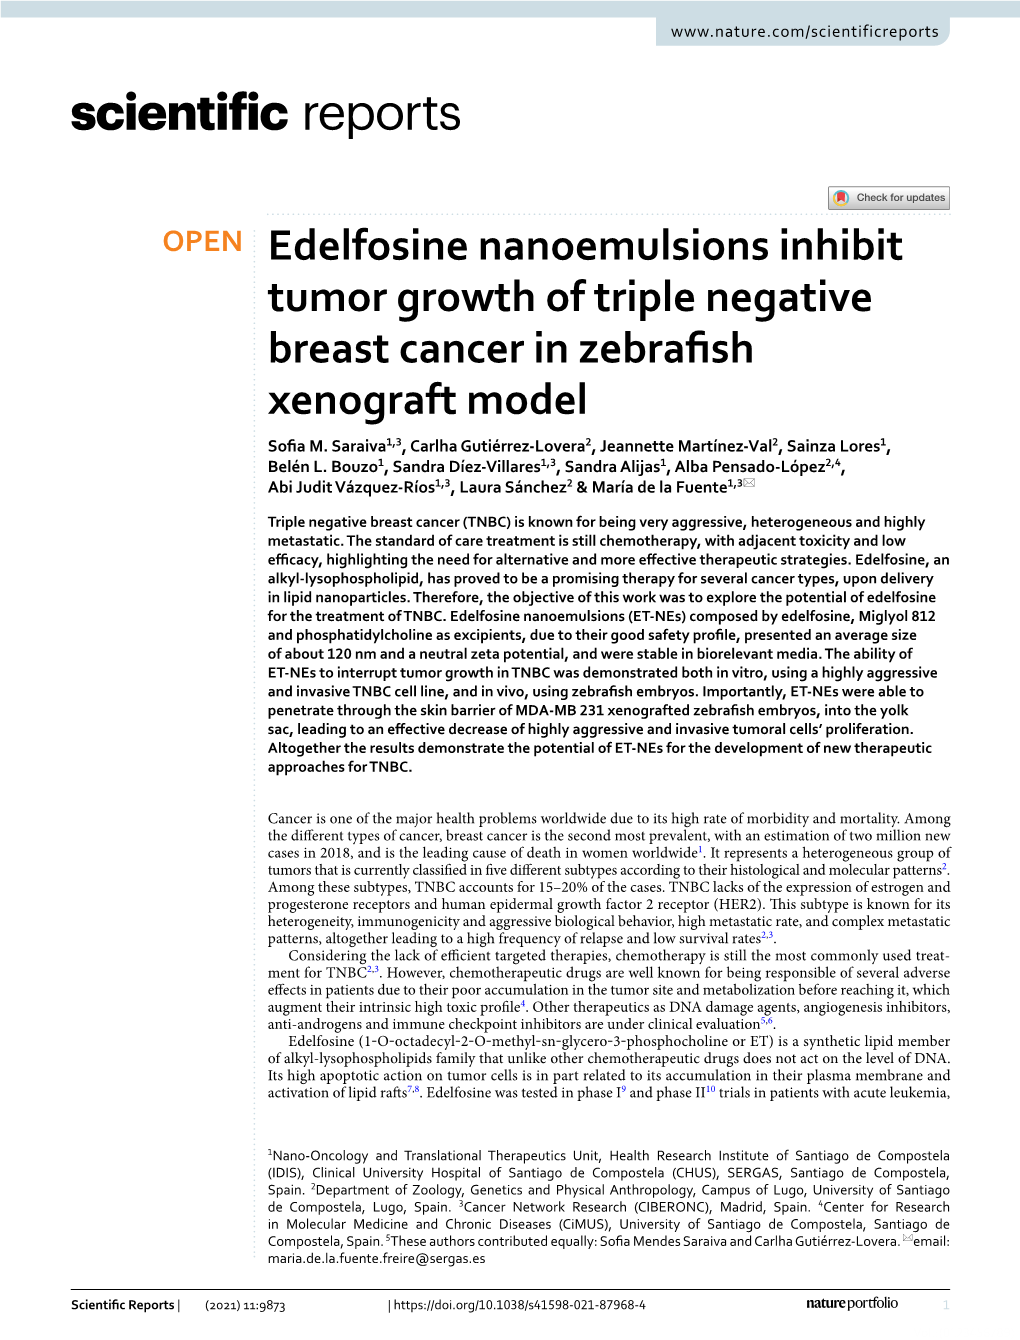 Edelfosine Nanoemulsions Inhibit Tumor Growth of Triple Negative Breast Cancer in Zebrafsh Xenograft Model Sofa M